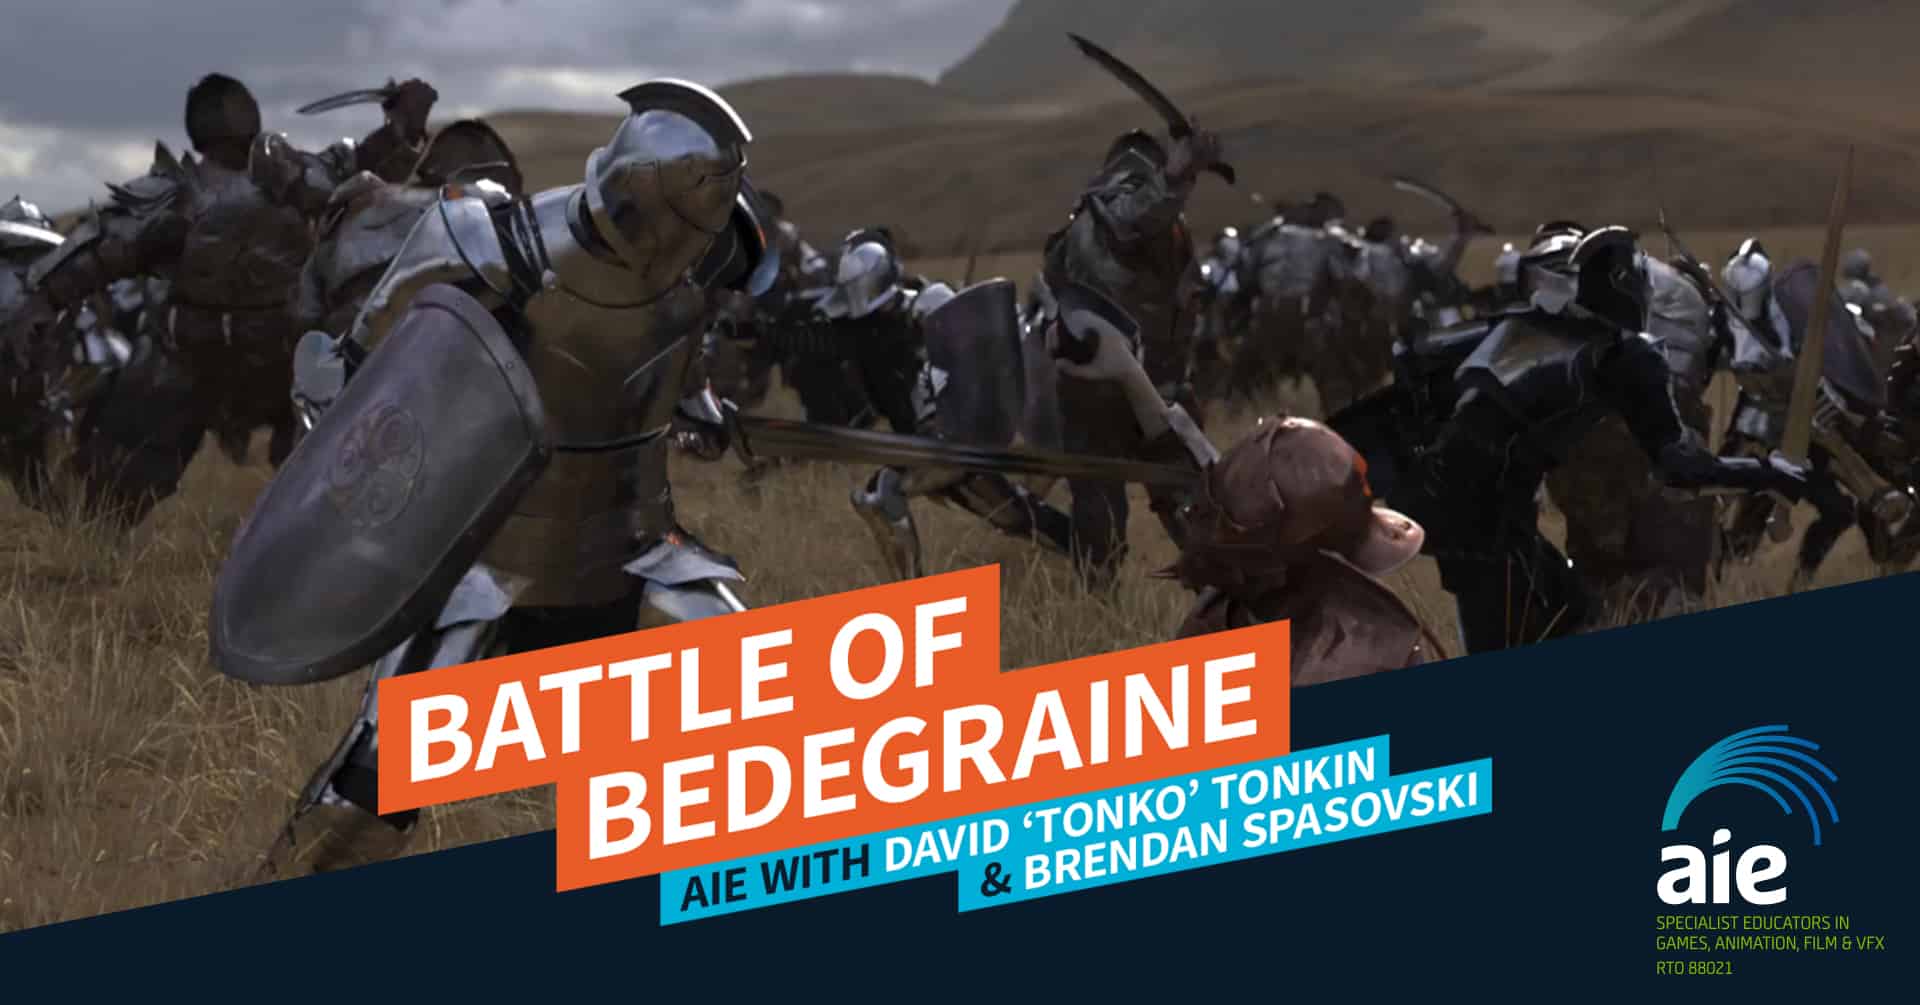 Battle of Bedegraine: AIE with David Tonkin and Brendan Spasovski | AIE Livestream